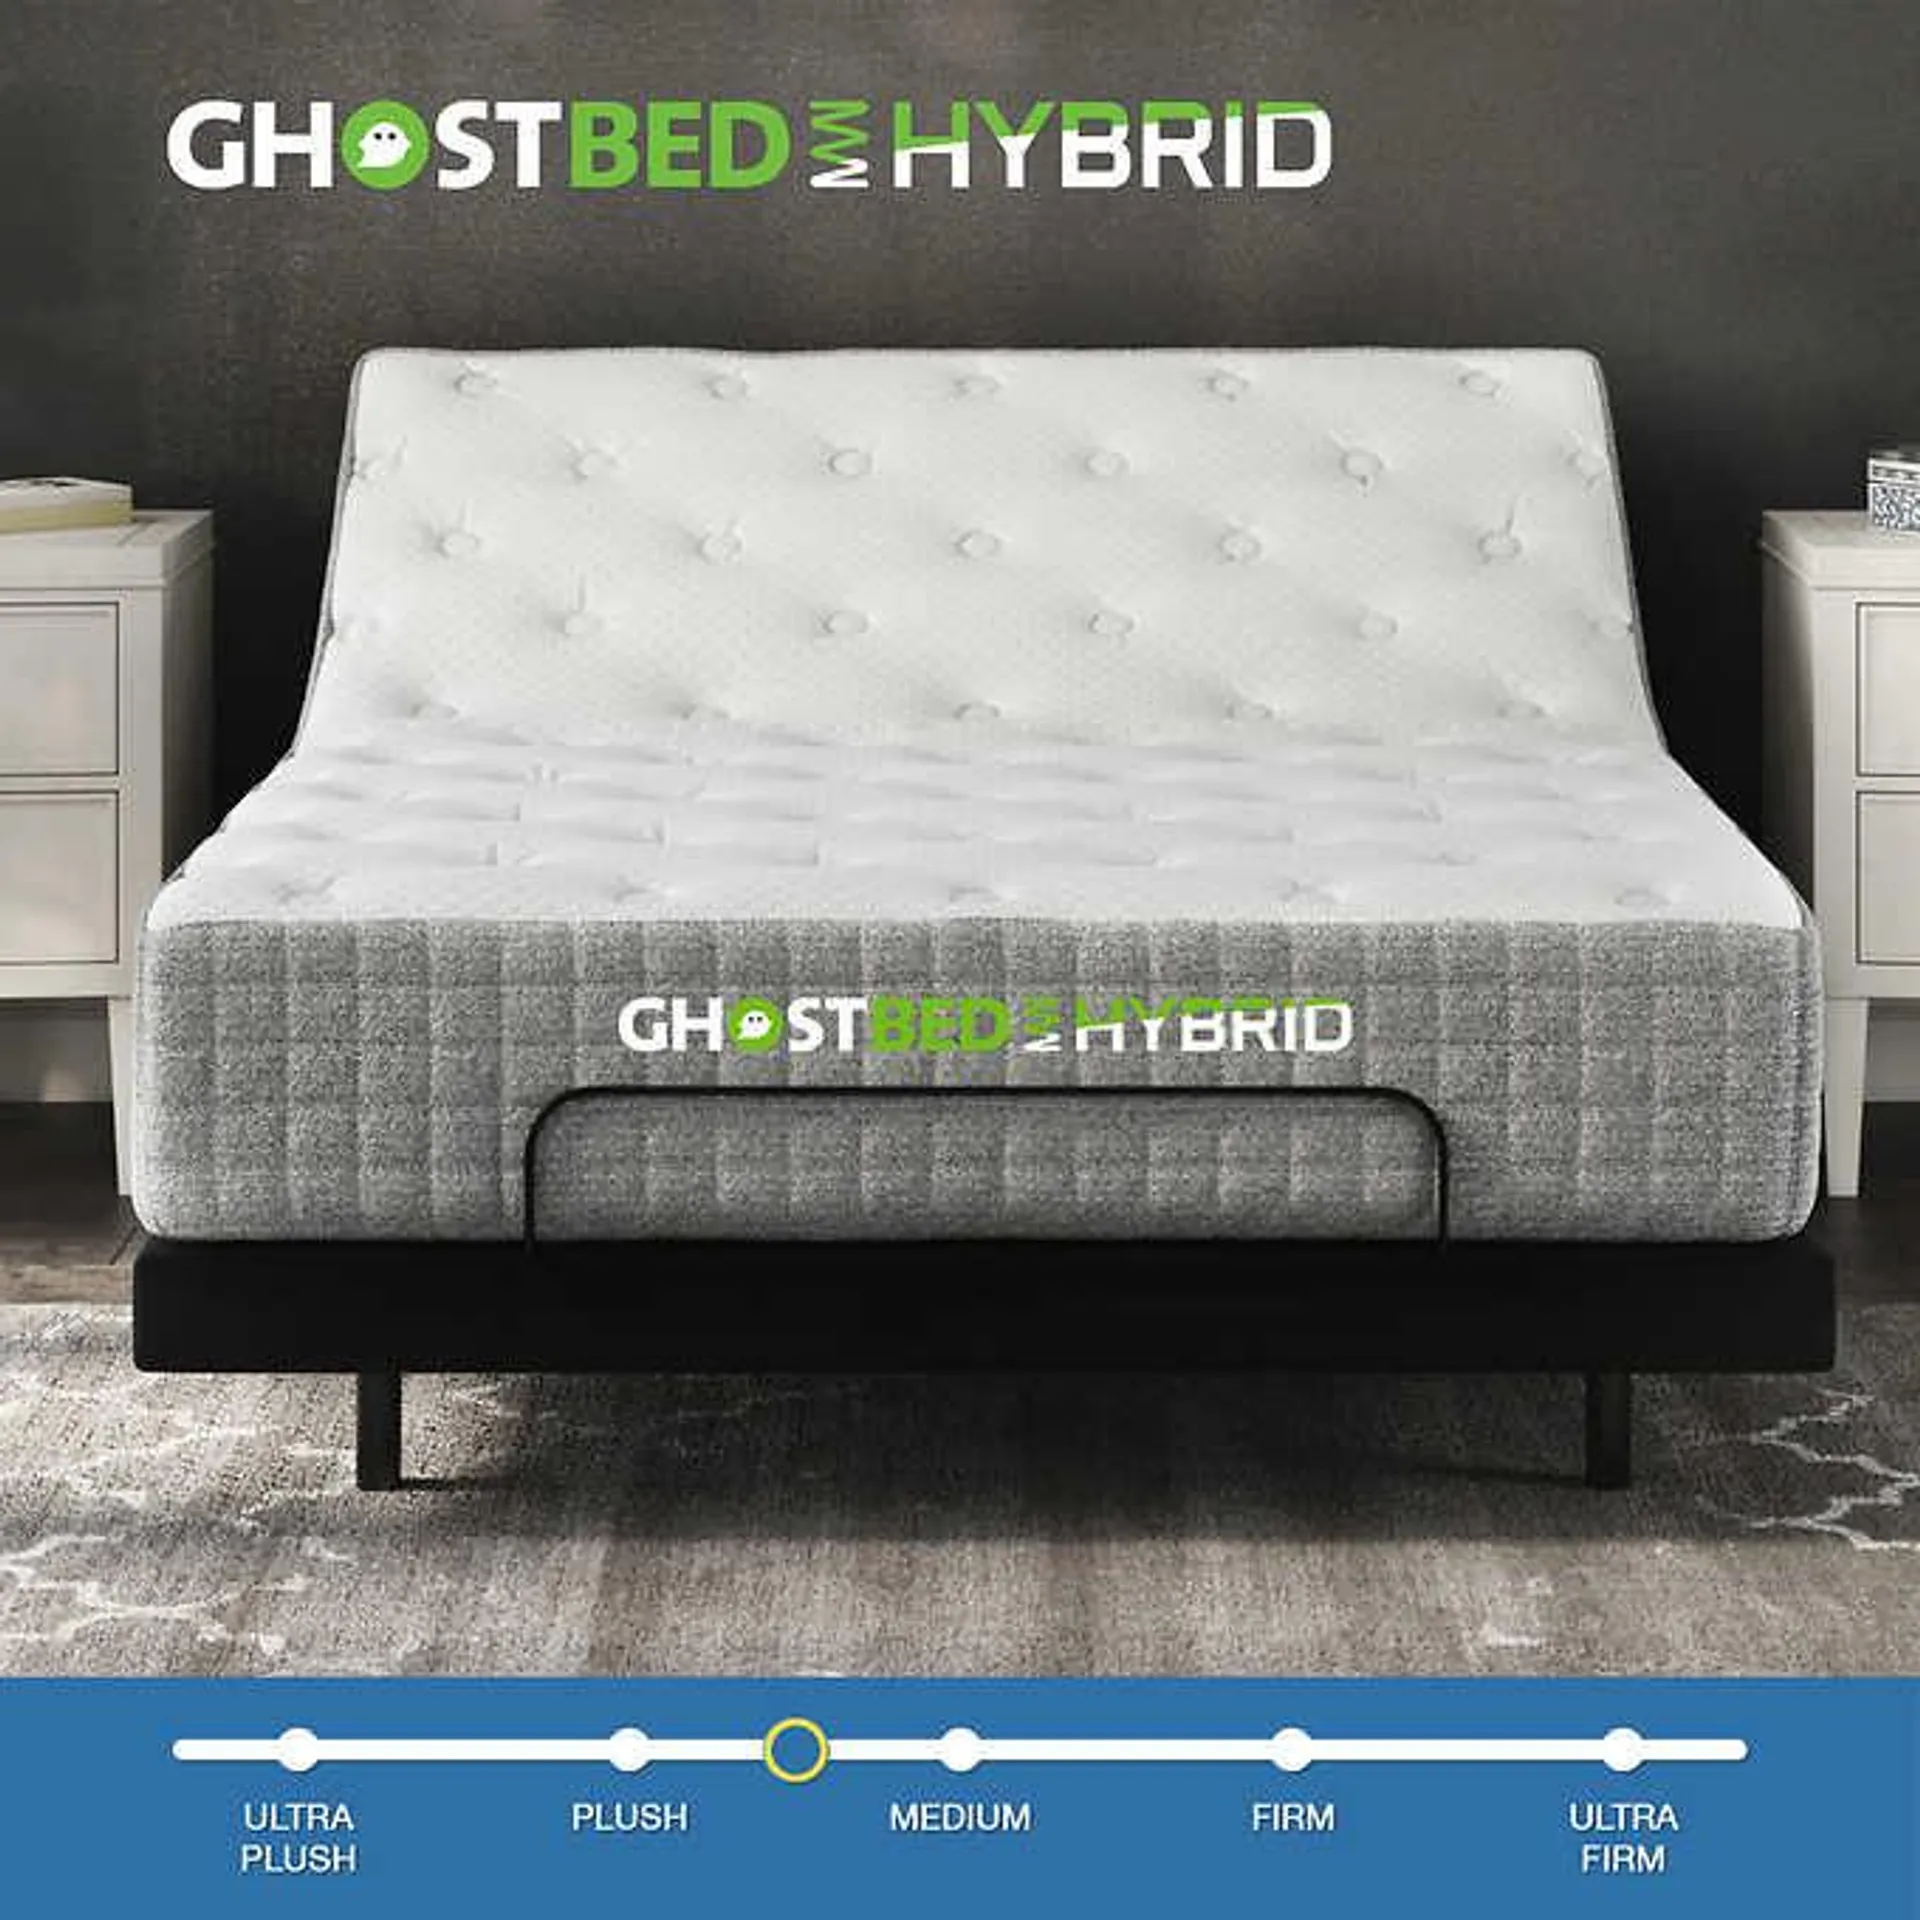 Ghostbed Hybrid 12" Medium-Plush Mattress with Luxury Adjustable Base